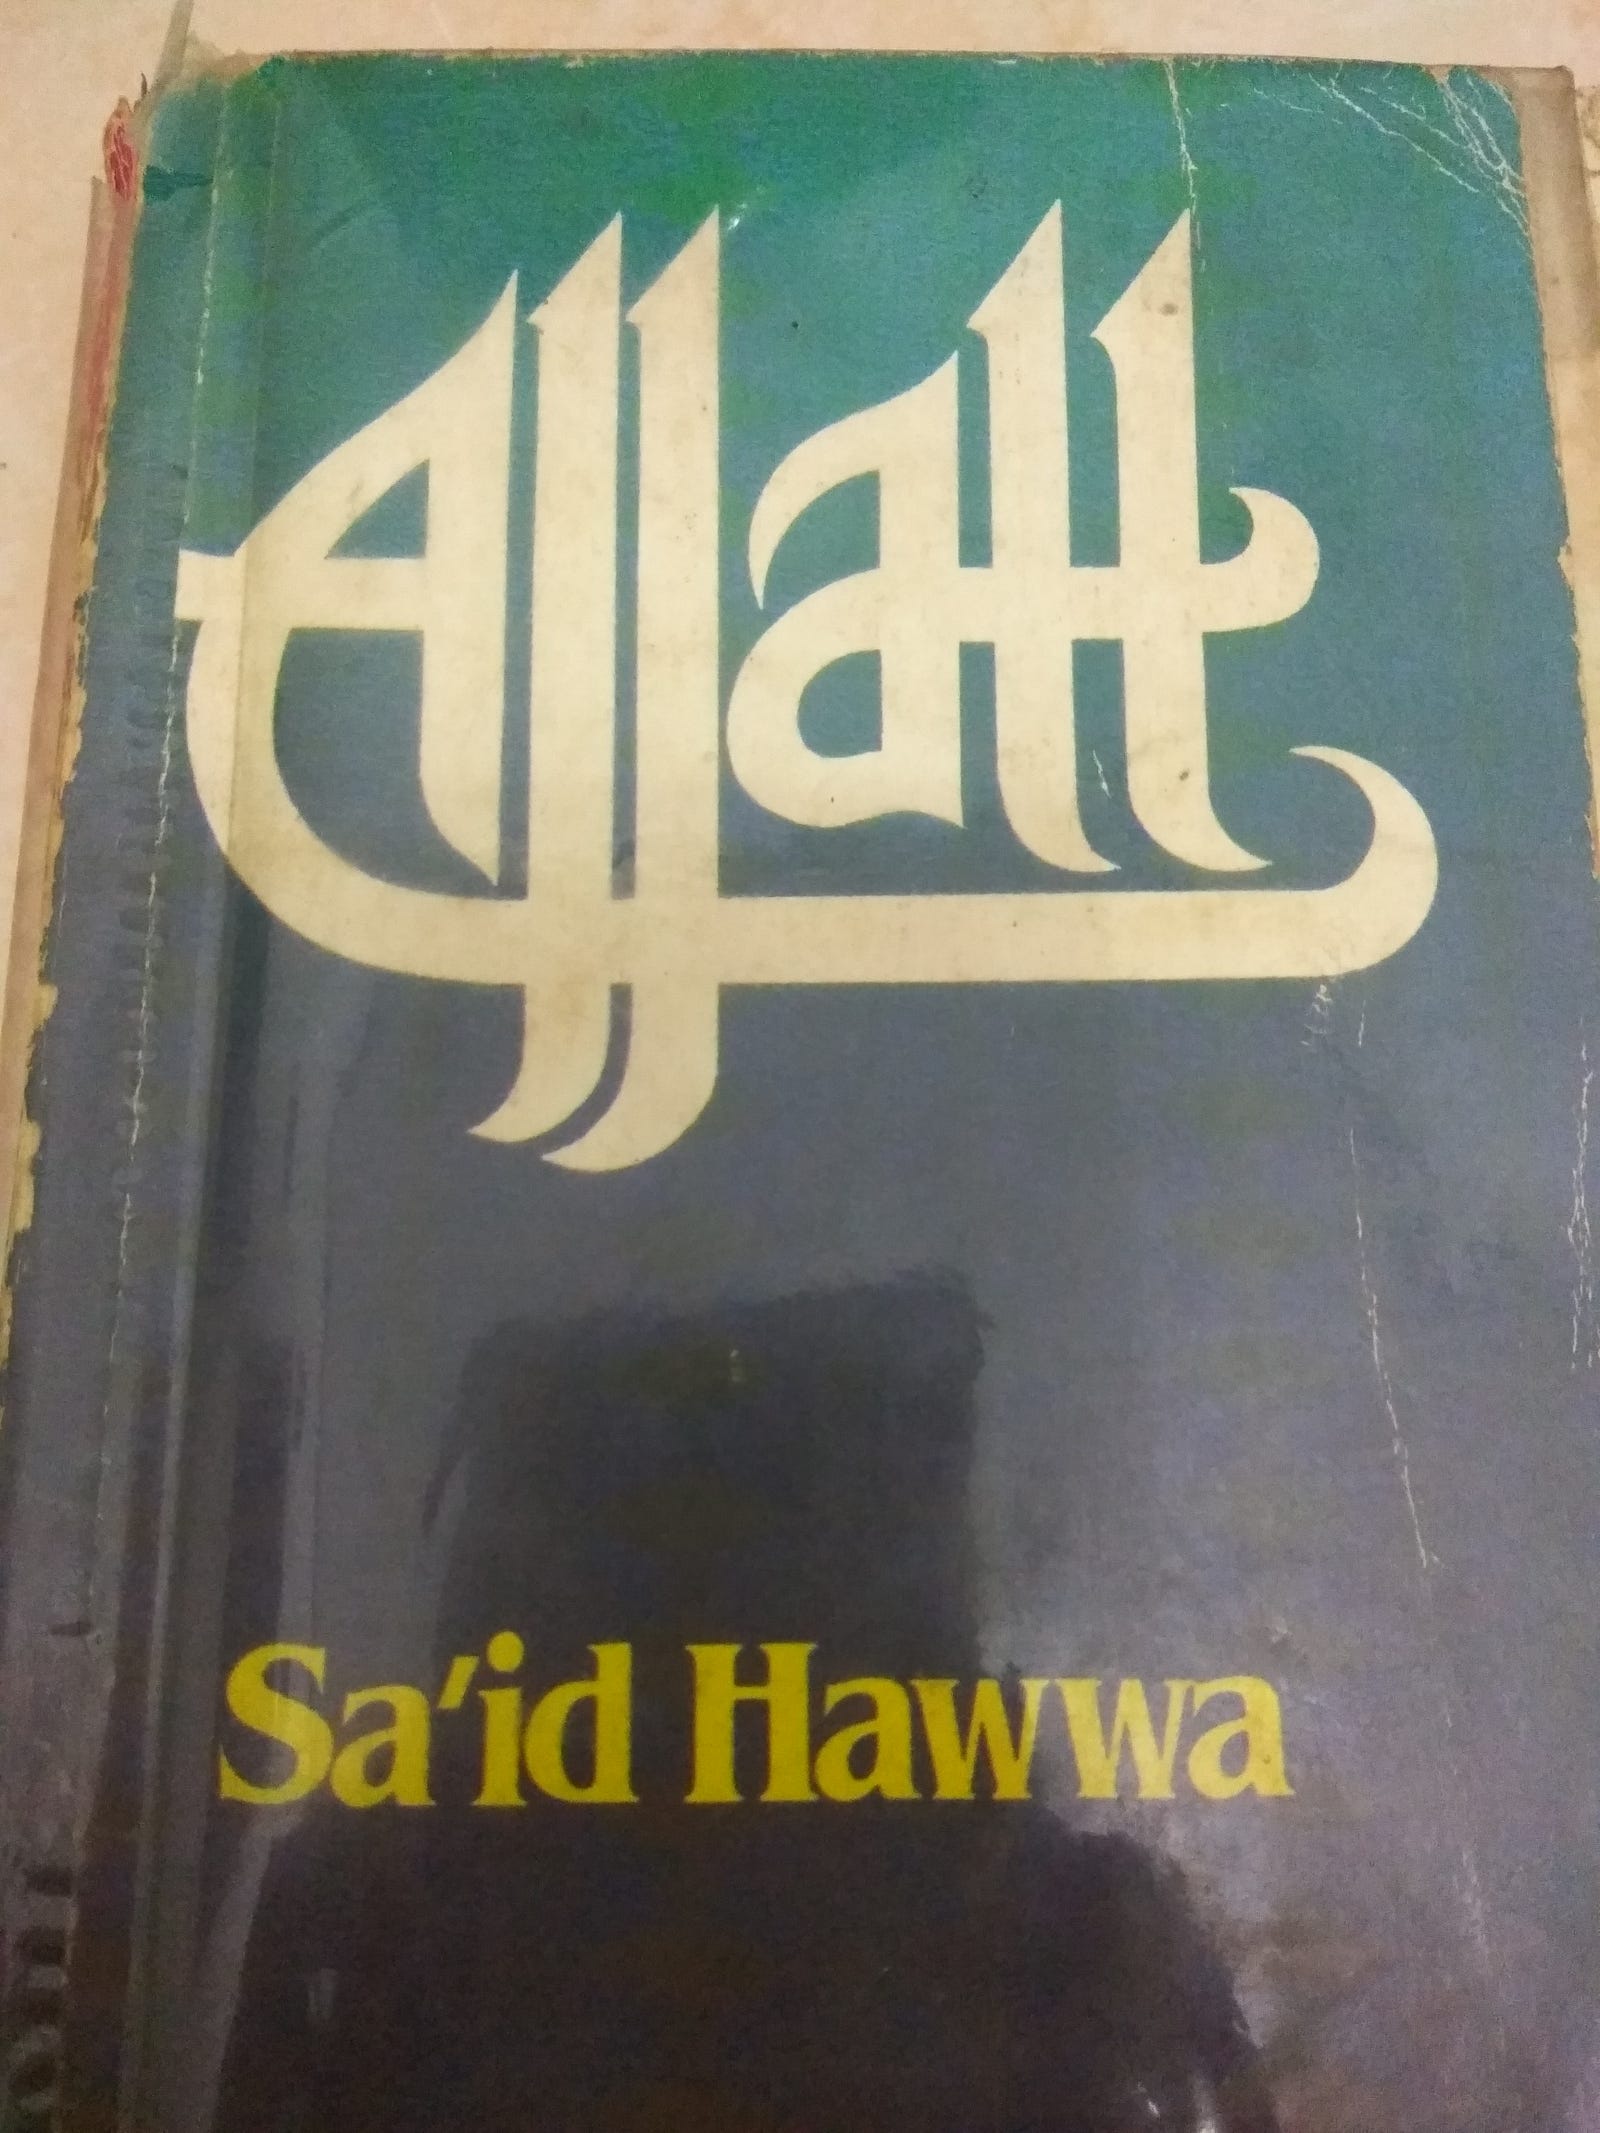 Sejak itu saya mulai terdorong membaca buku Islam Salah satu buku yang saya baca saya beli 20 05 1992 adalah buku Allah karya Sa id Hawwa